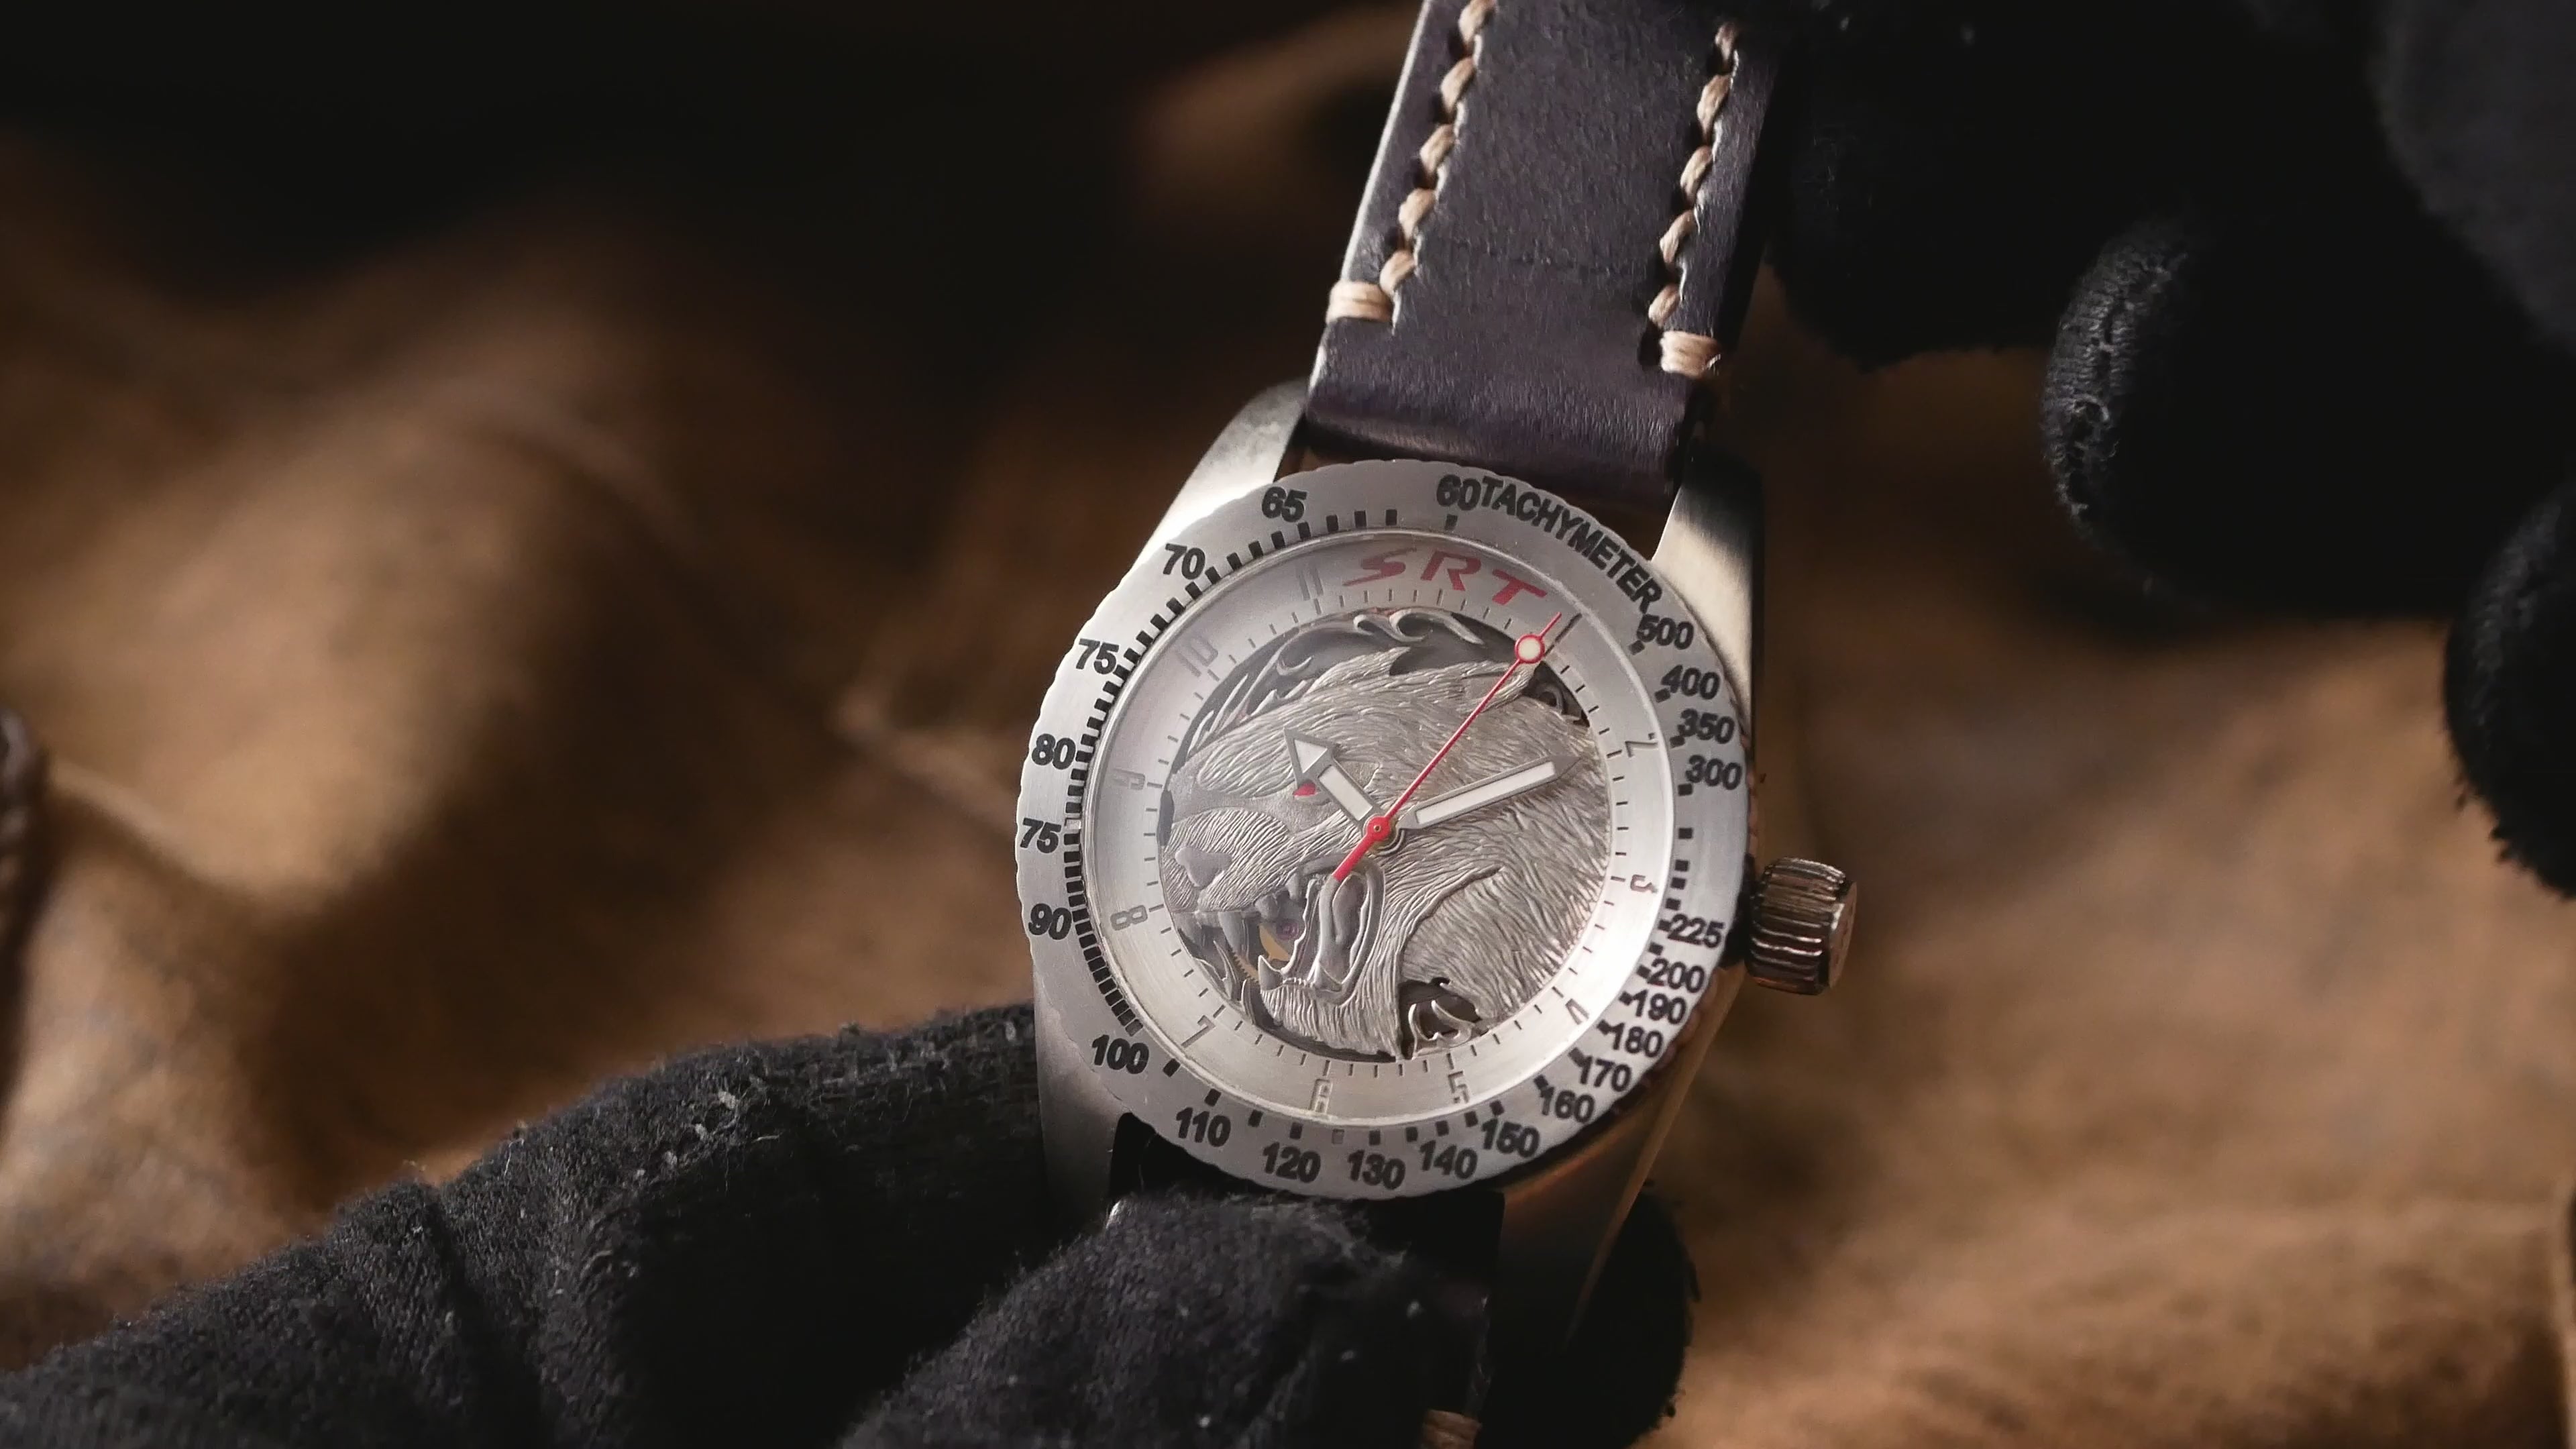 Mole ETA 2824 automatic wristwatch, swiss movement, titanium case